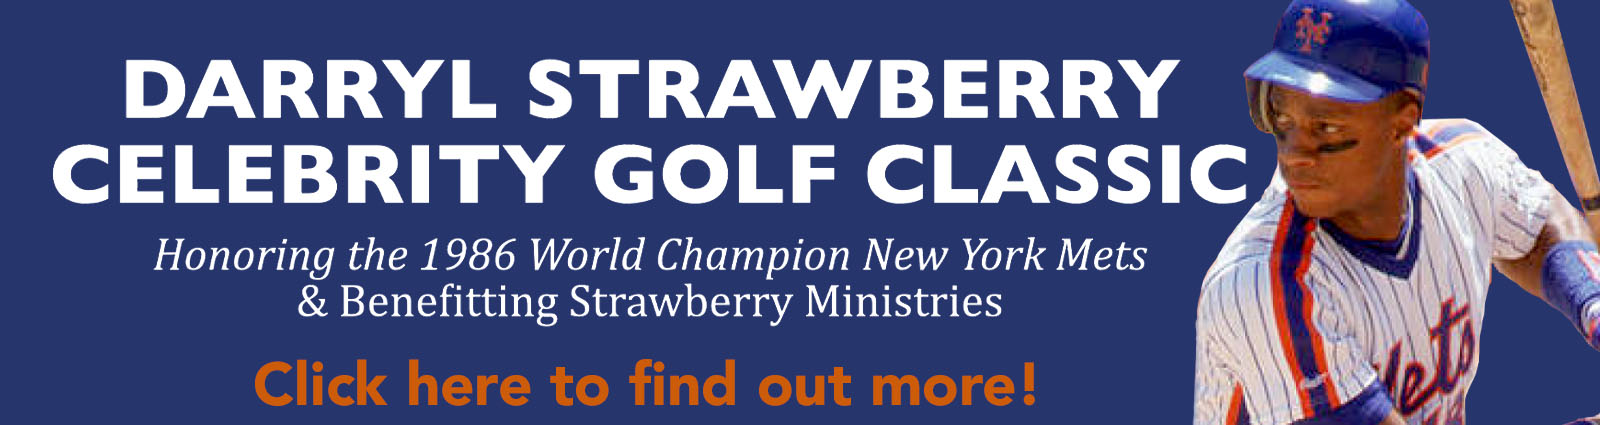 Darryl Strawberry Celebrity Golf Classic